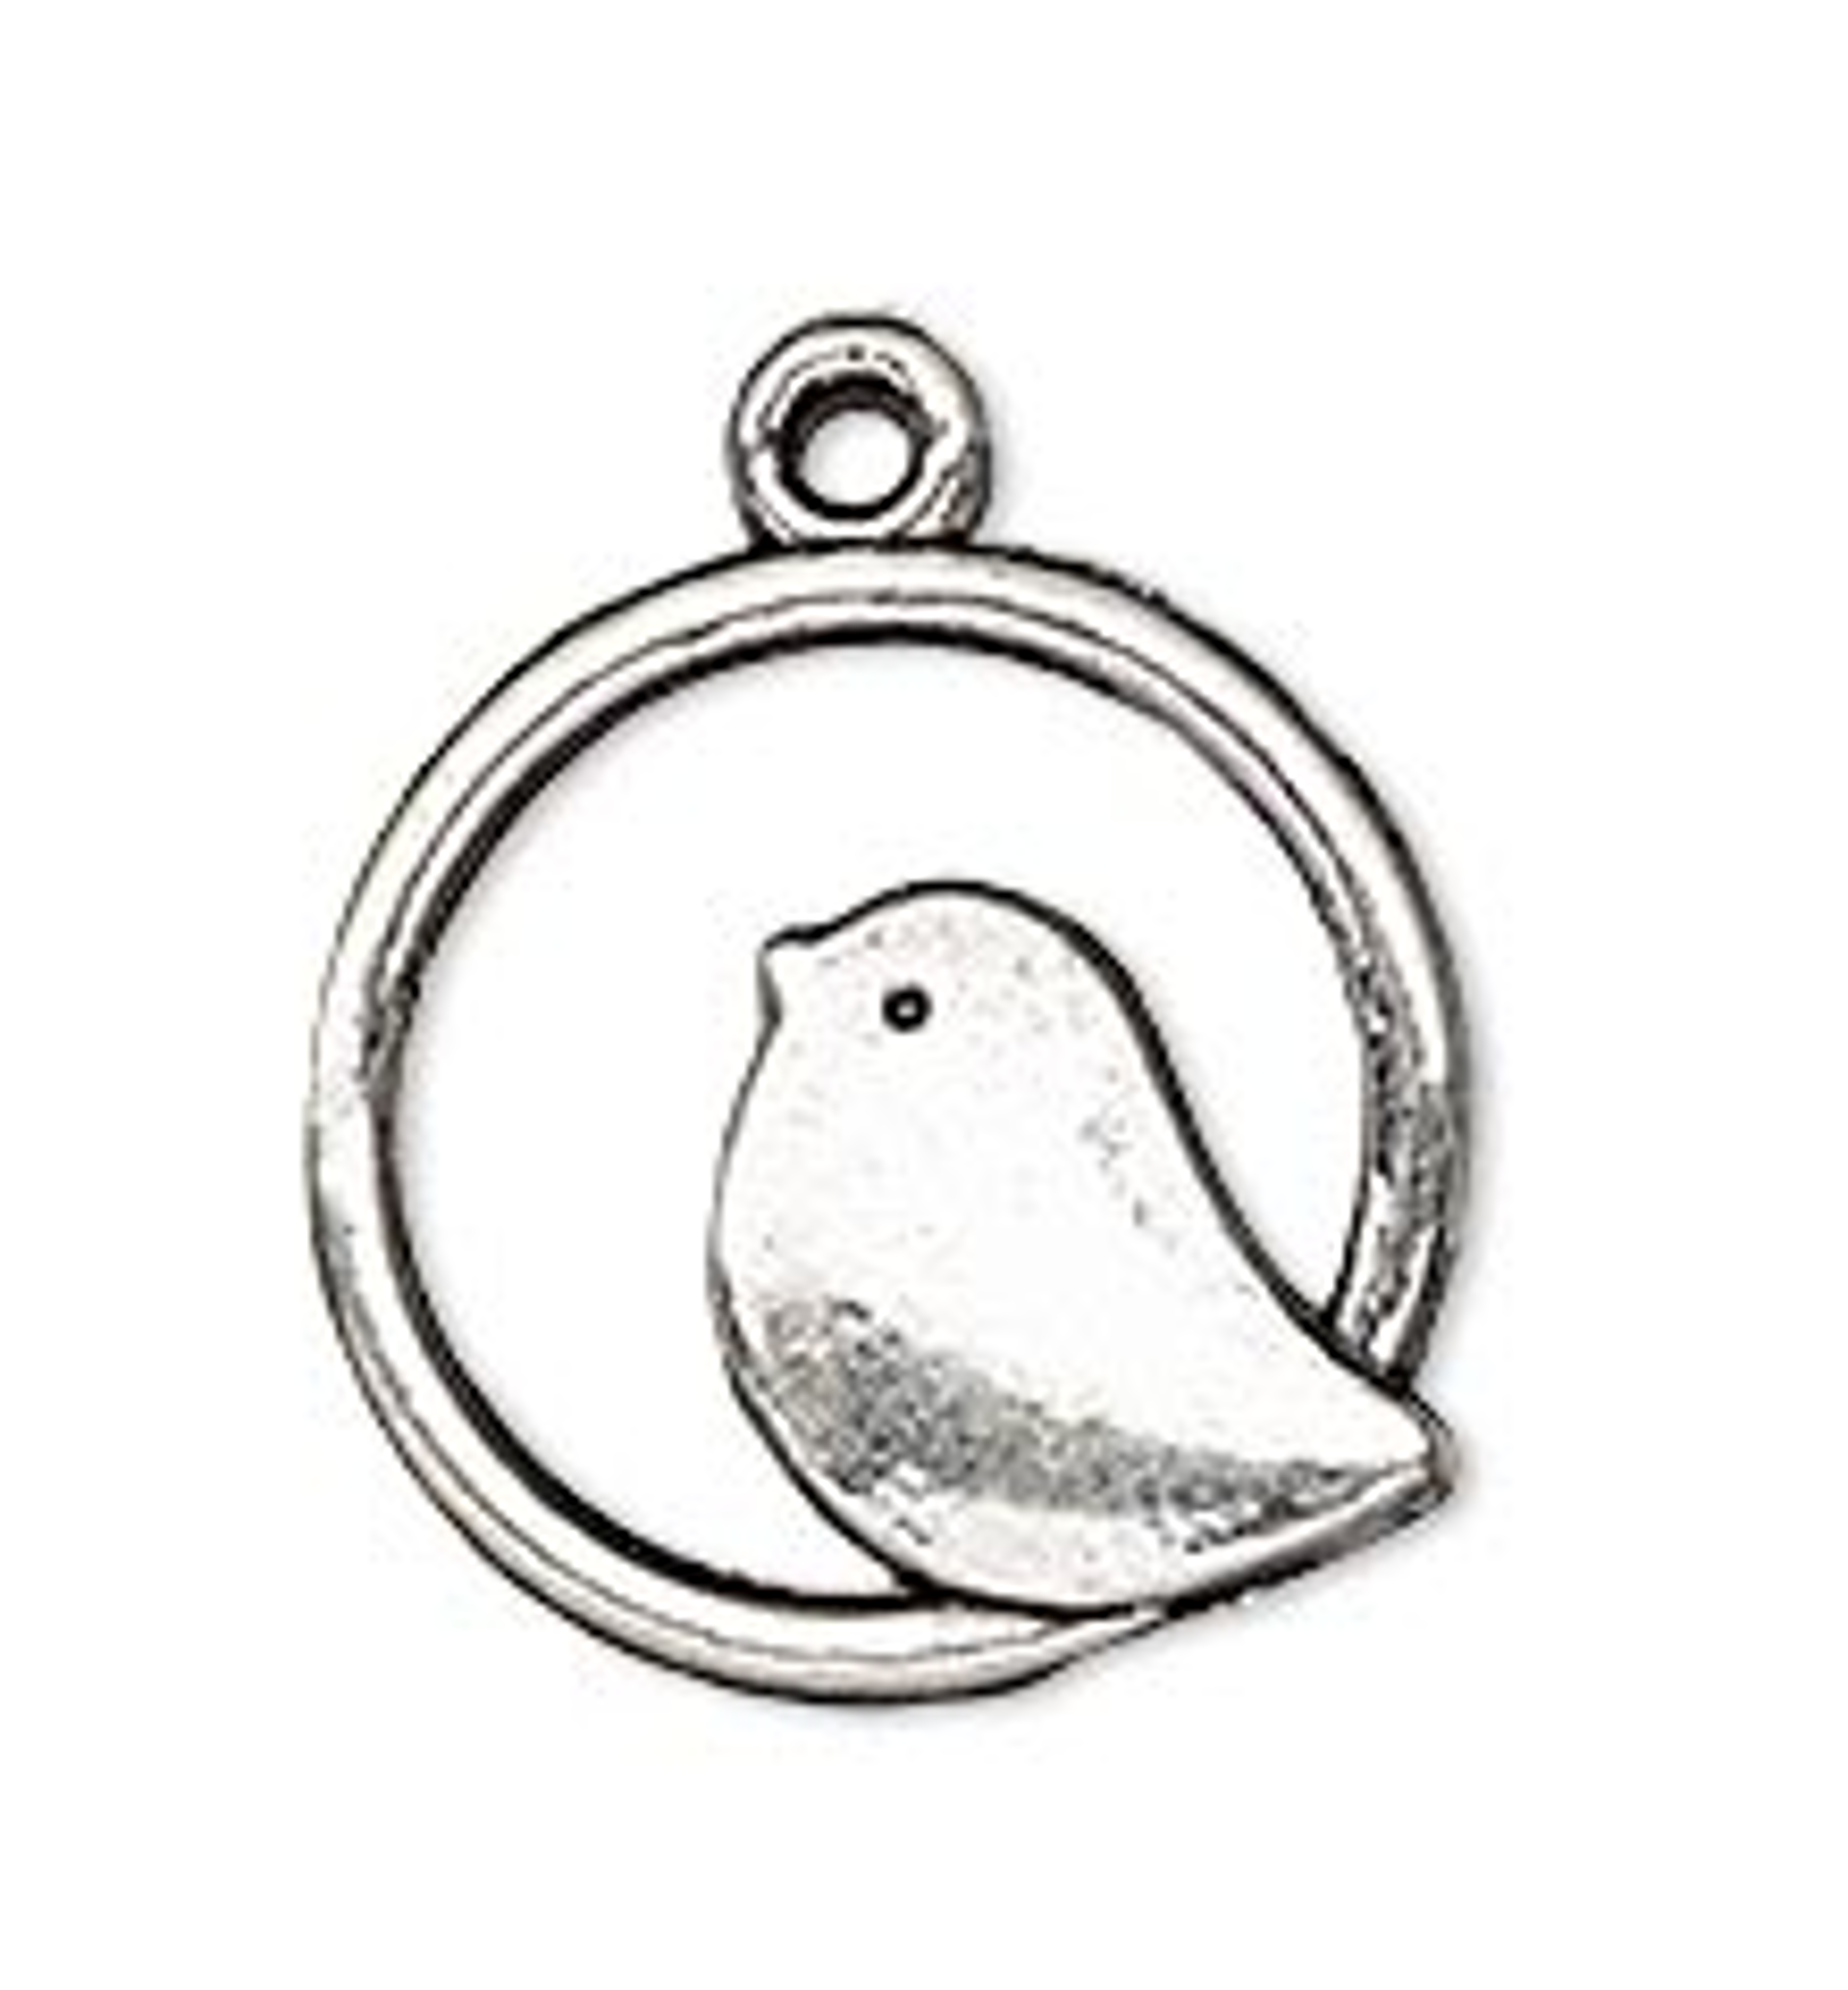 Necklace - Bird in Circle Antique Silver Tone by Indigo Desert Ranch - Jewelry